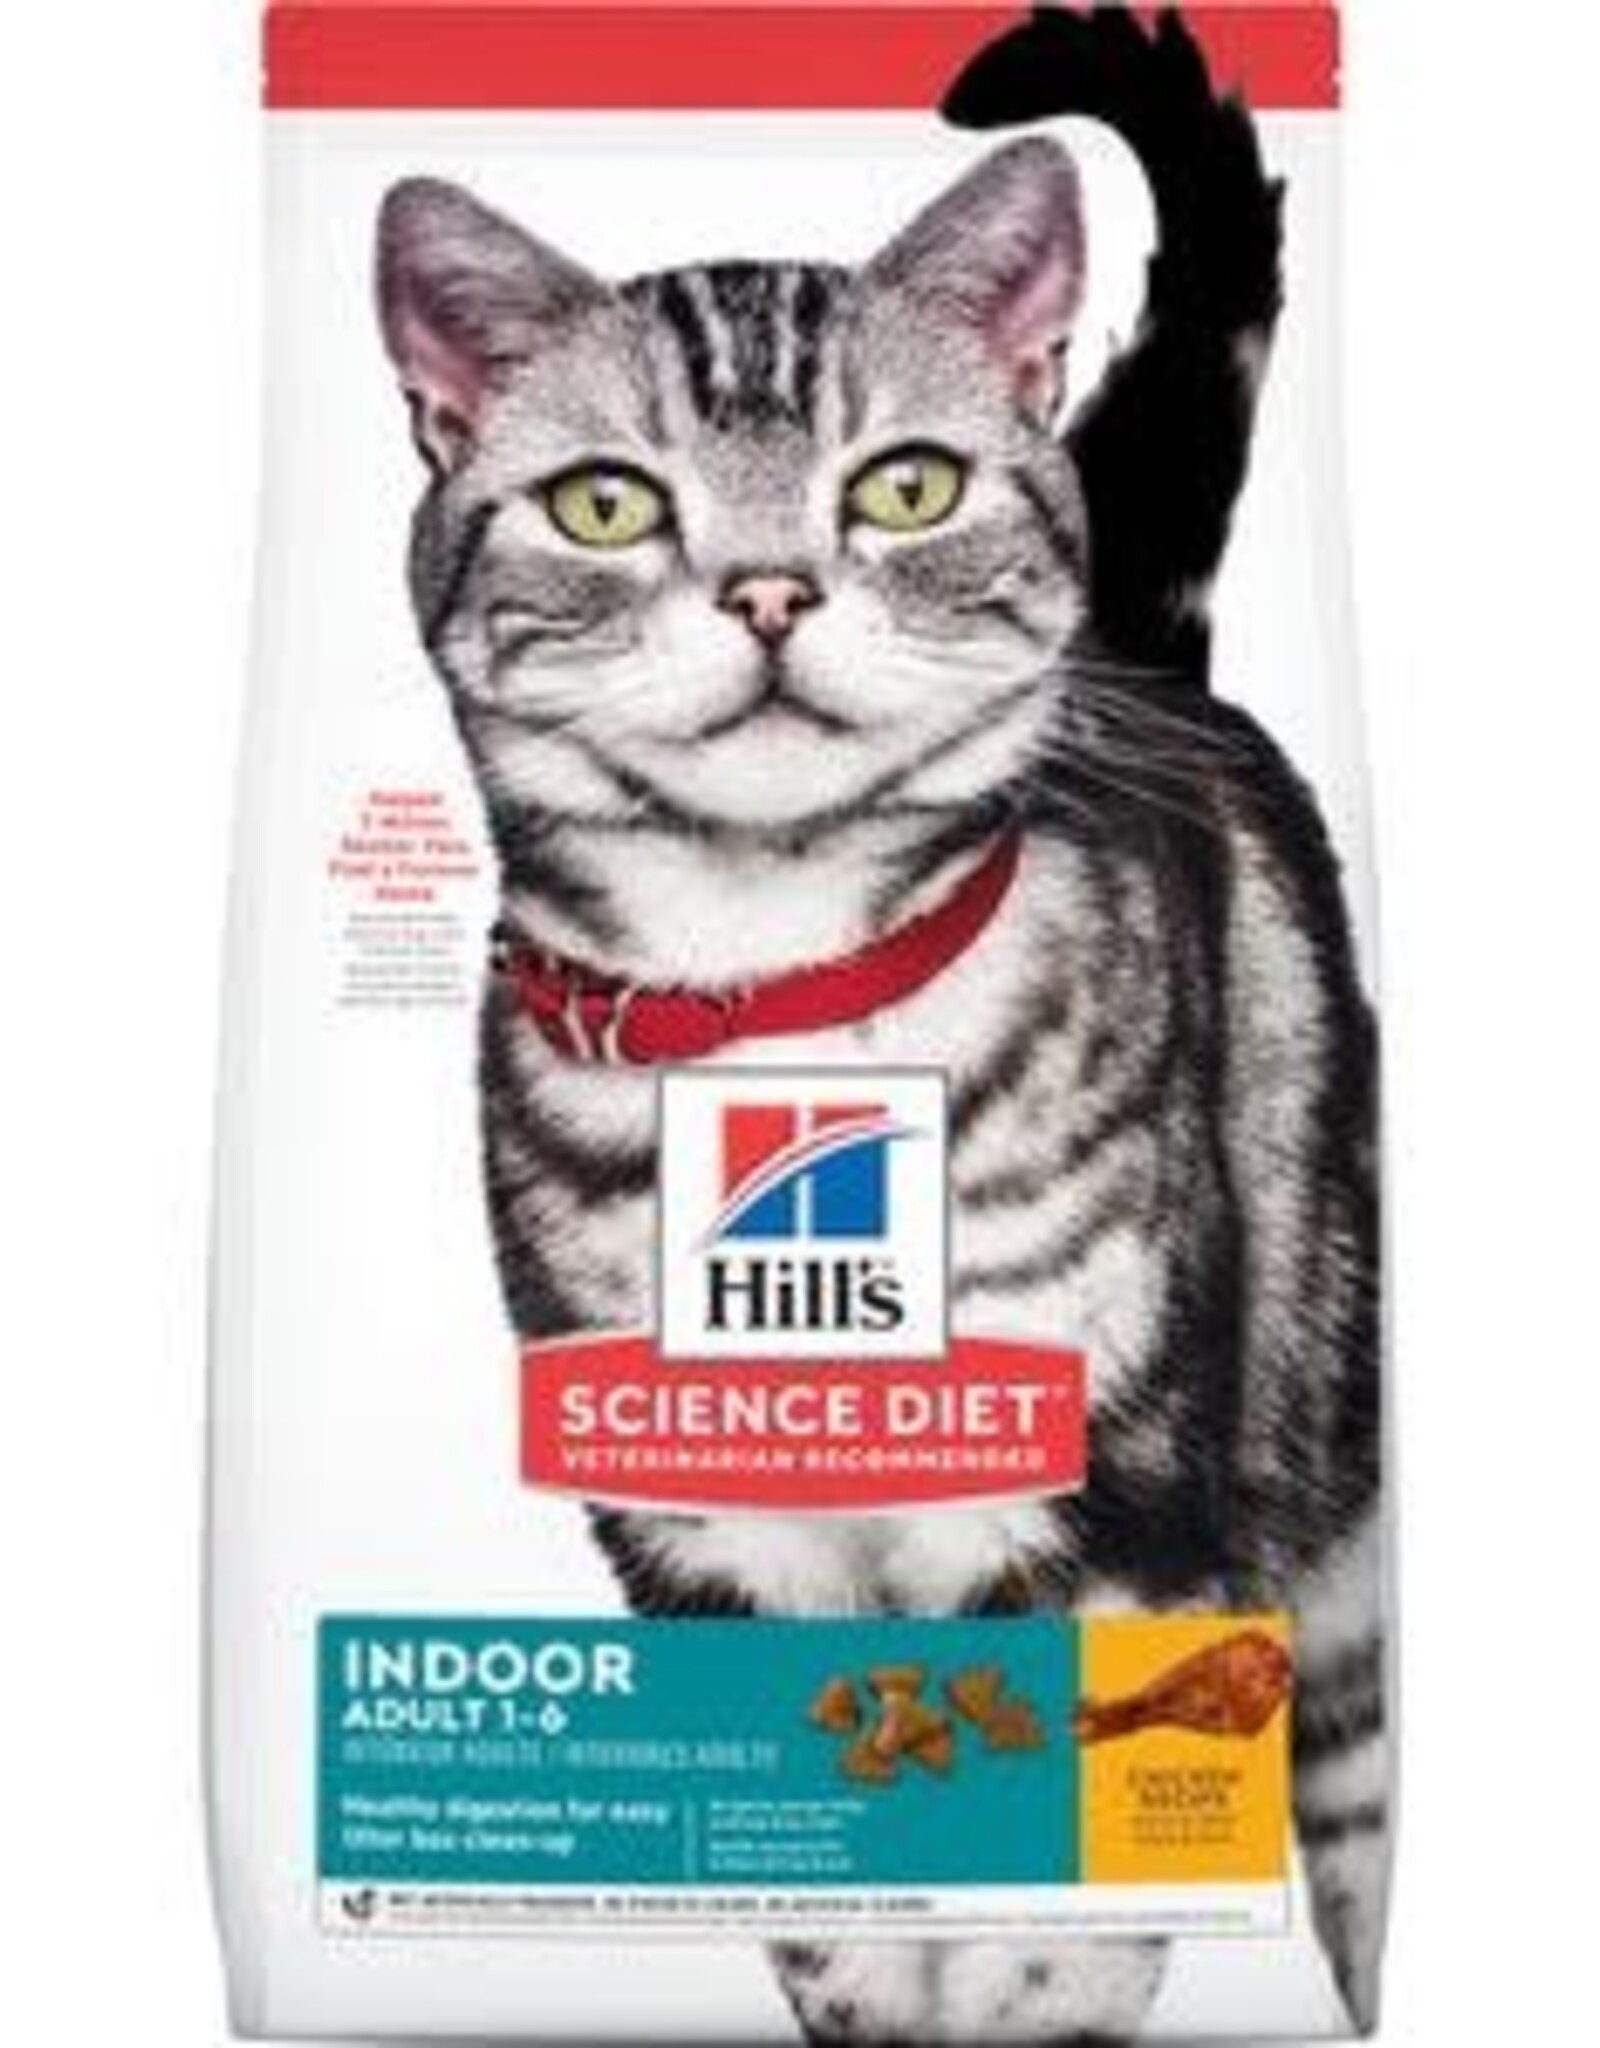 Hill's Science Diet Hill's SD Feline  Adult 1-6 Indoor 7lbs